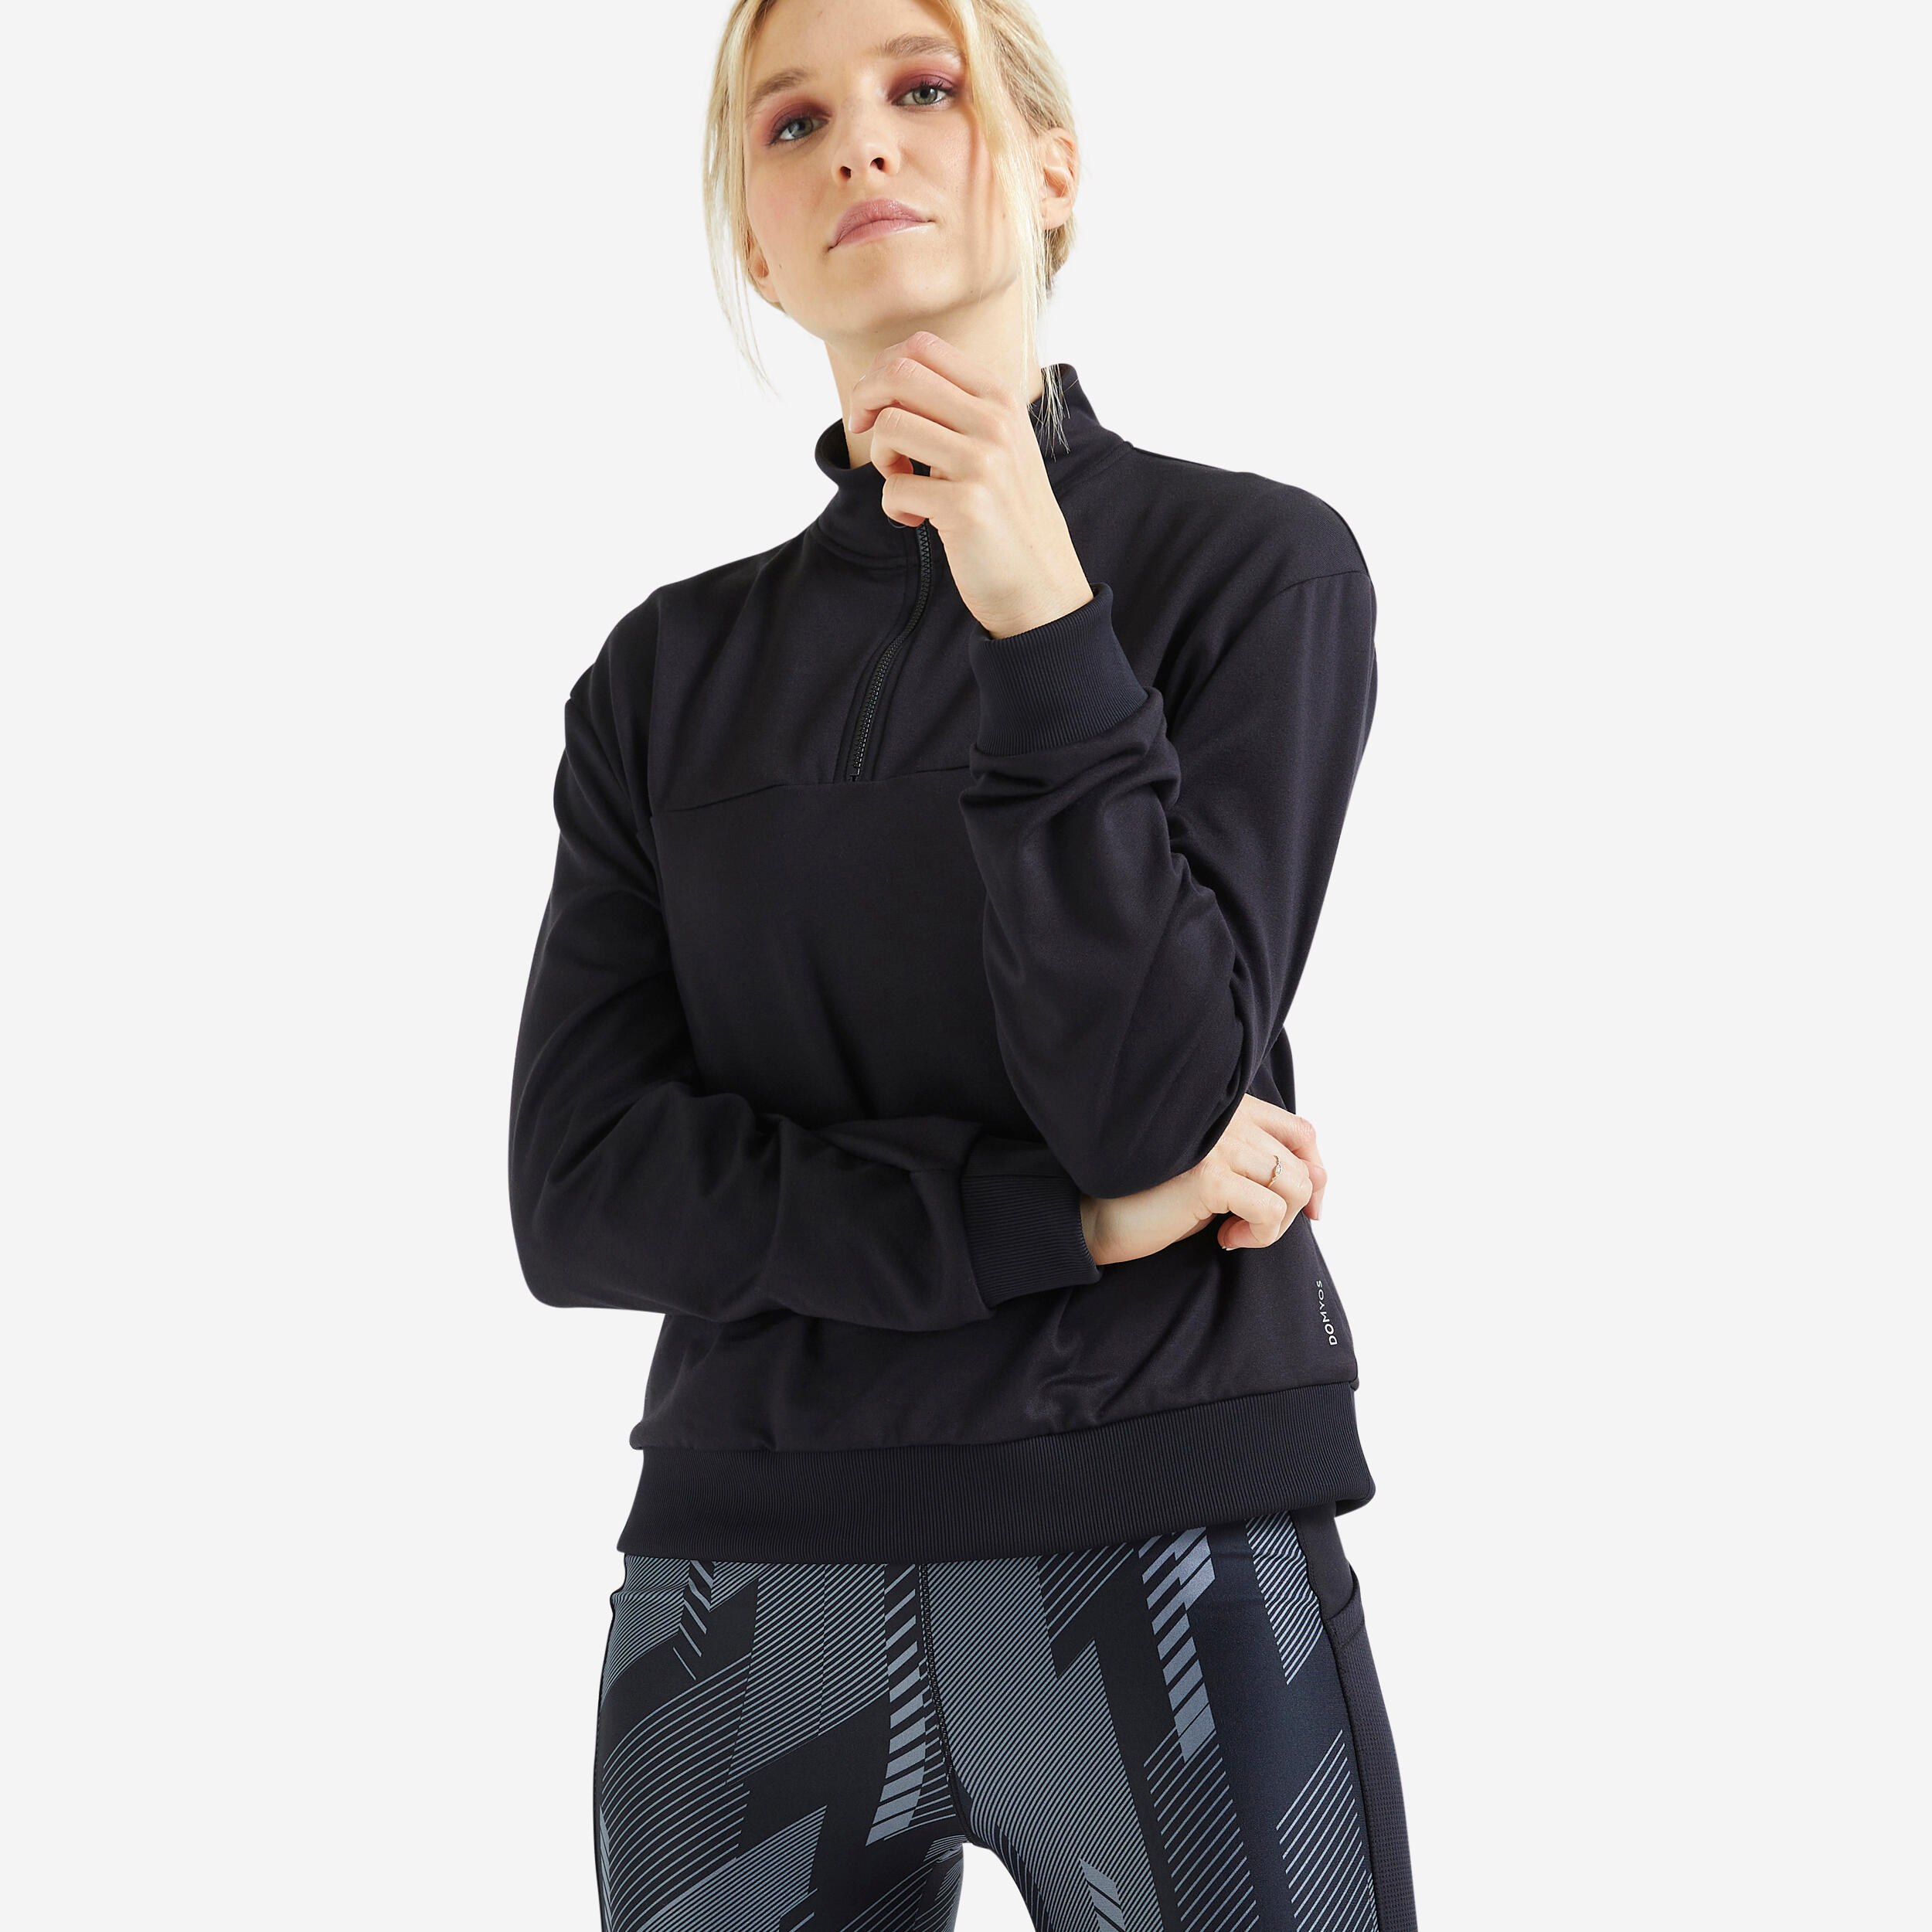 DOMYOS Women's Cropped Long-Sleeved Fitness Cardio Sweatshirt - Black